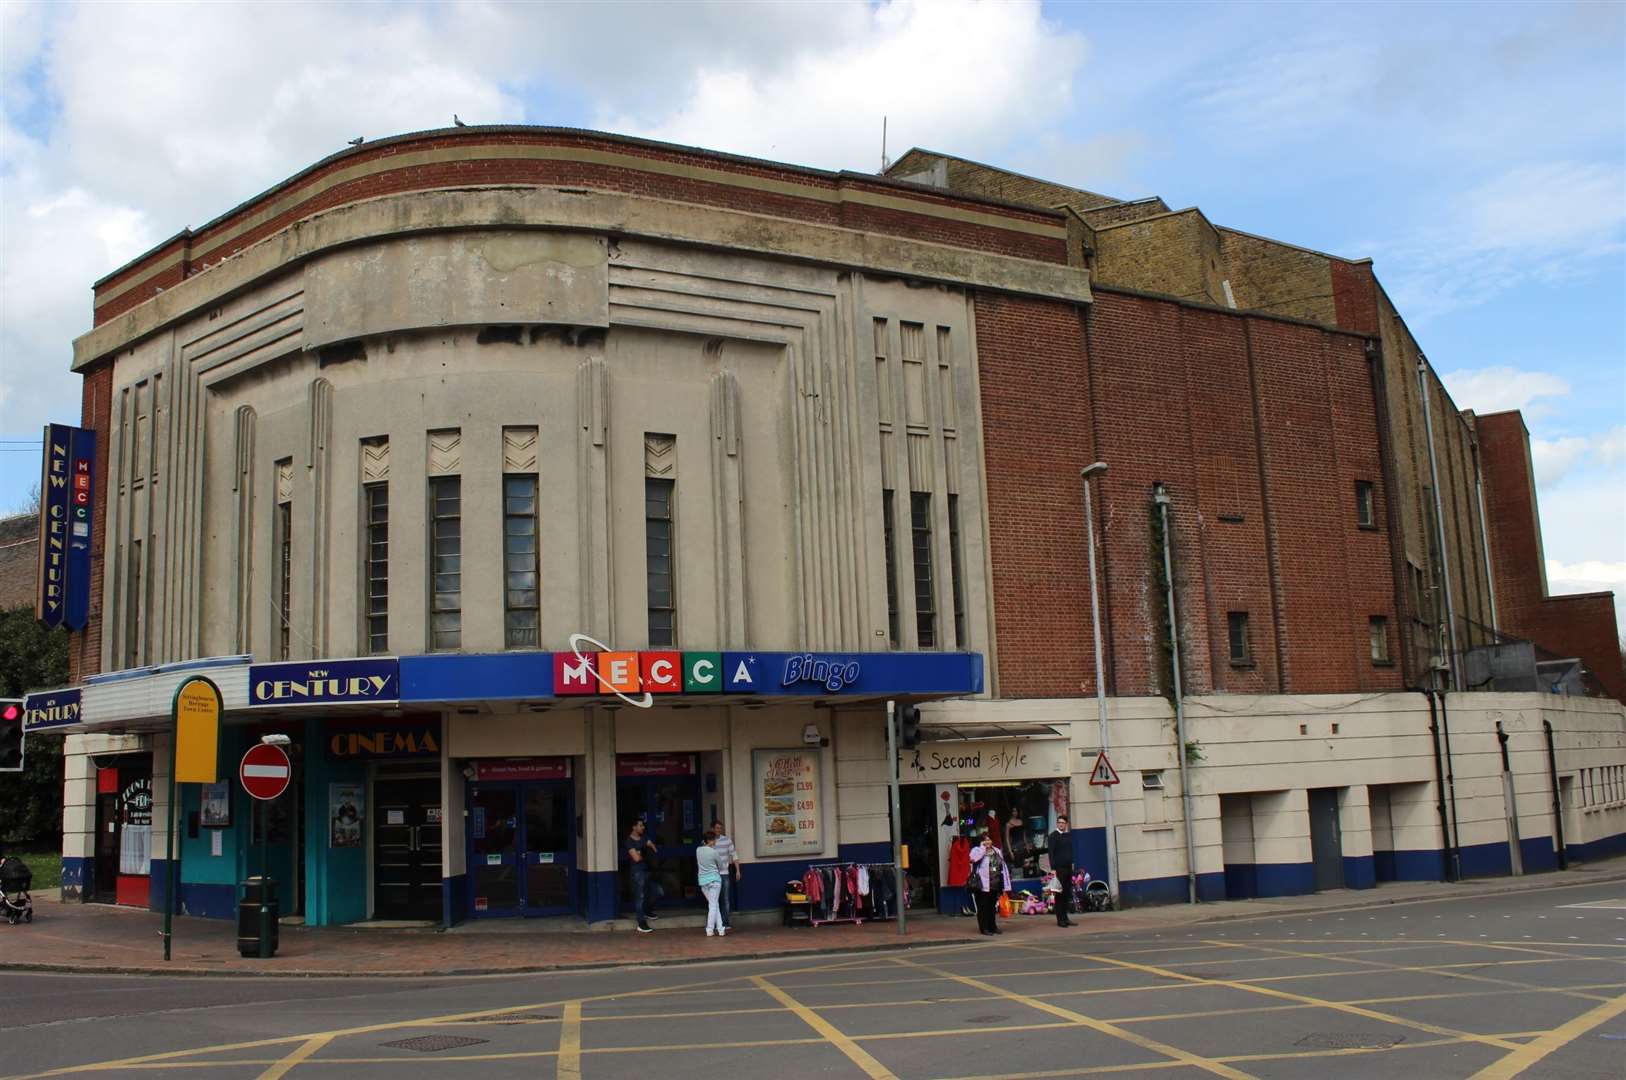 The New Century Cinema in Sittingbourne High Street and Mecca Bingo hall